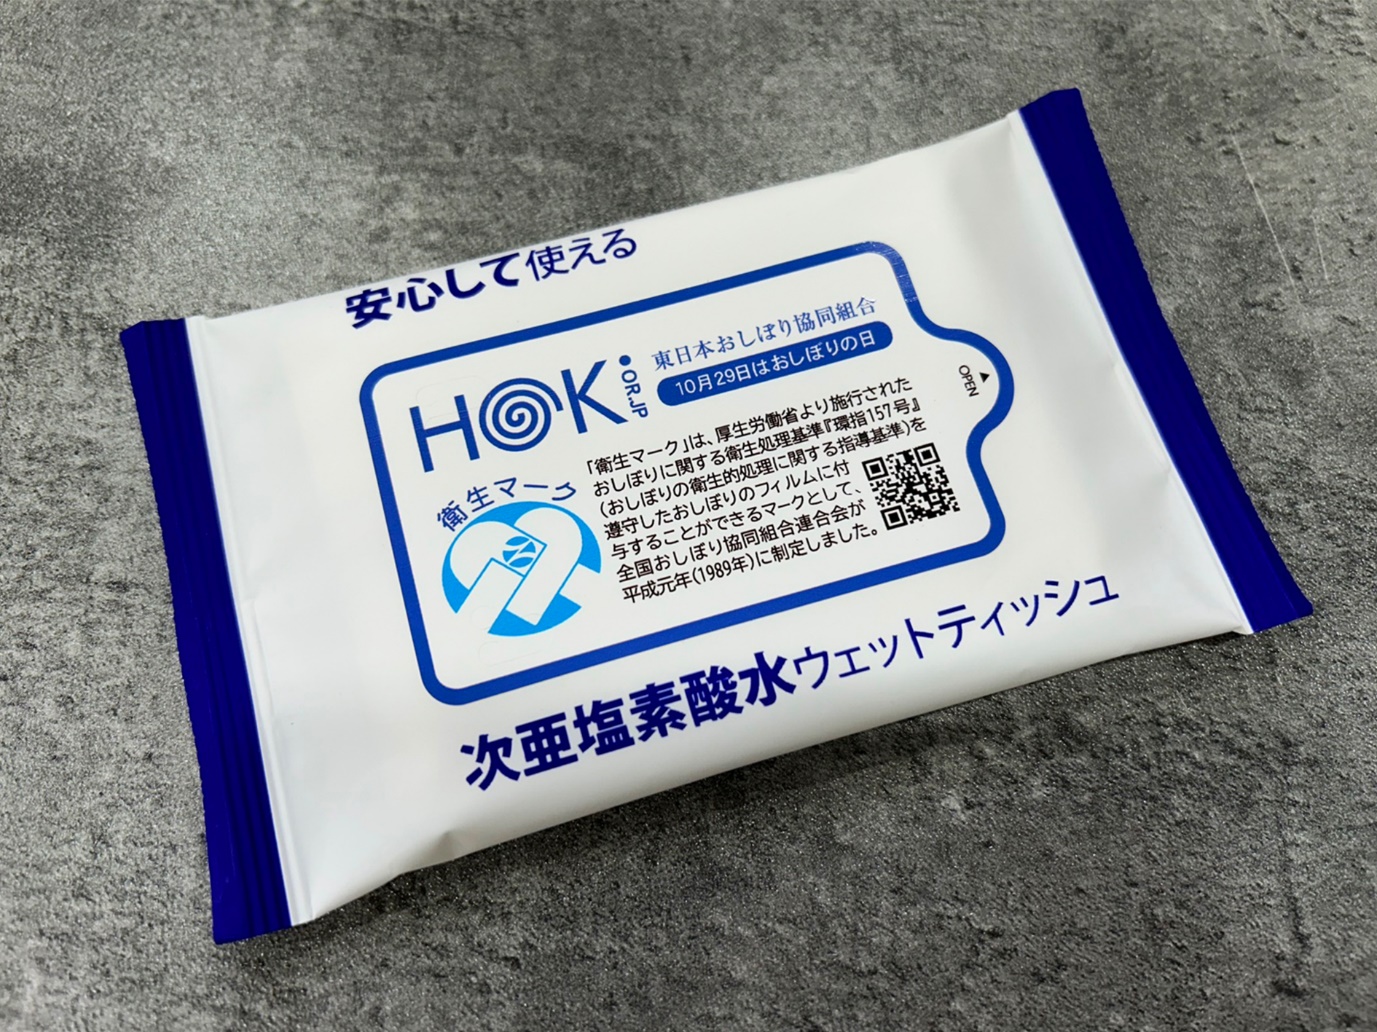 HOK, 東日本おしぼり共同組合, おしぼりの日, 衛生マークの印刷ウェットティッシュ